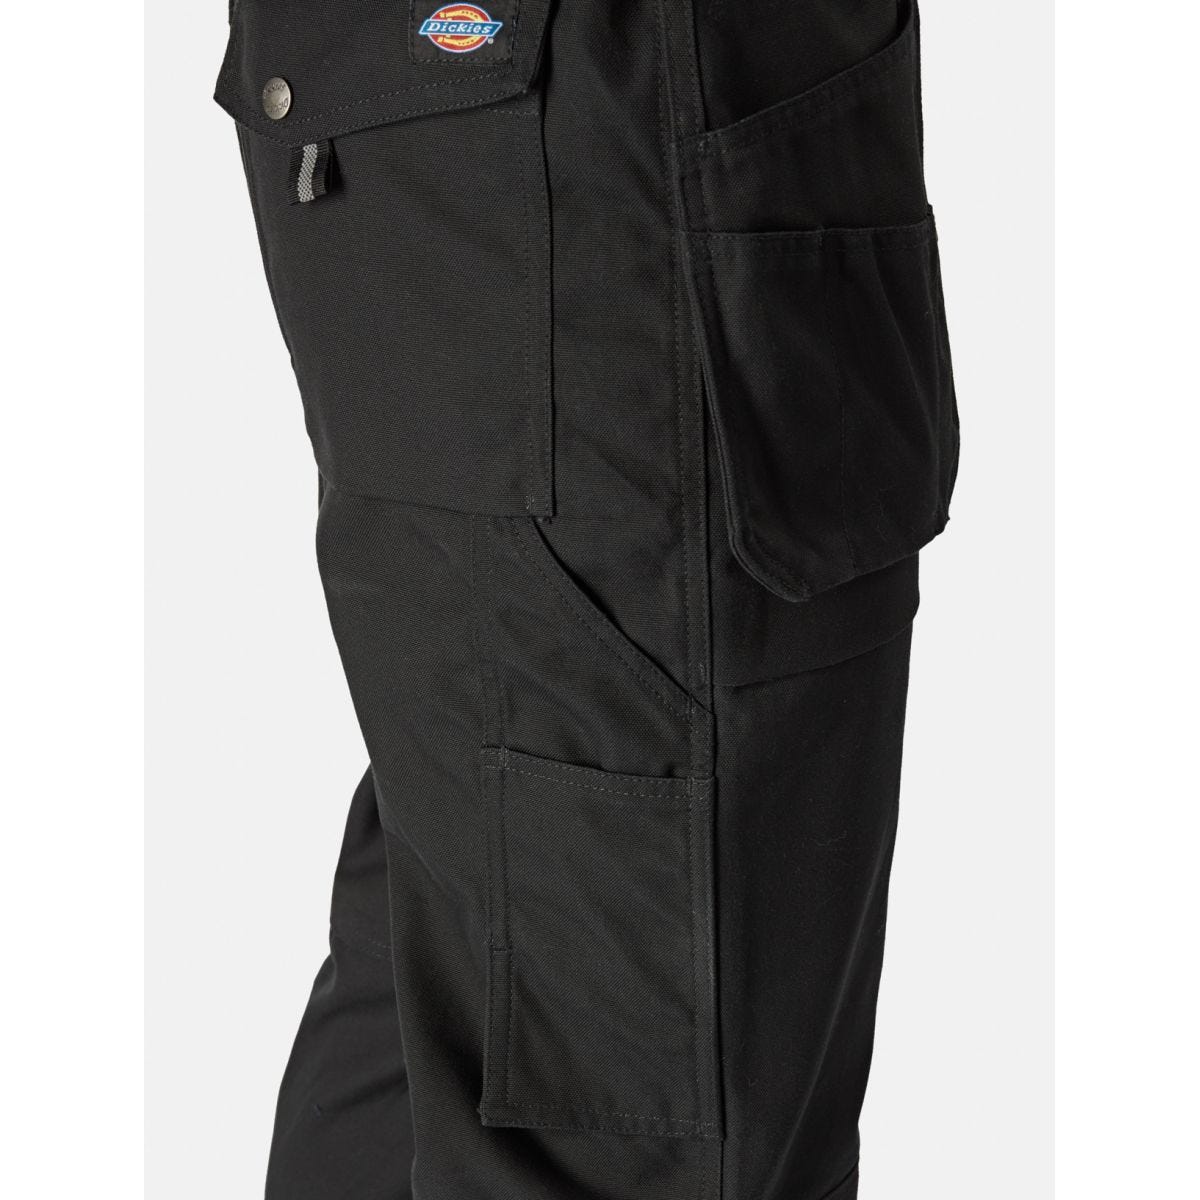 Pantalon Eisenhower multi-poches Noir - Dickies - Taille 40 4